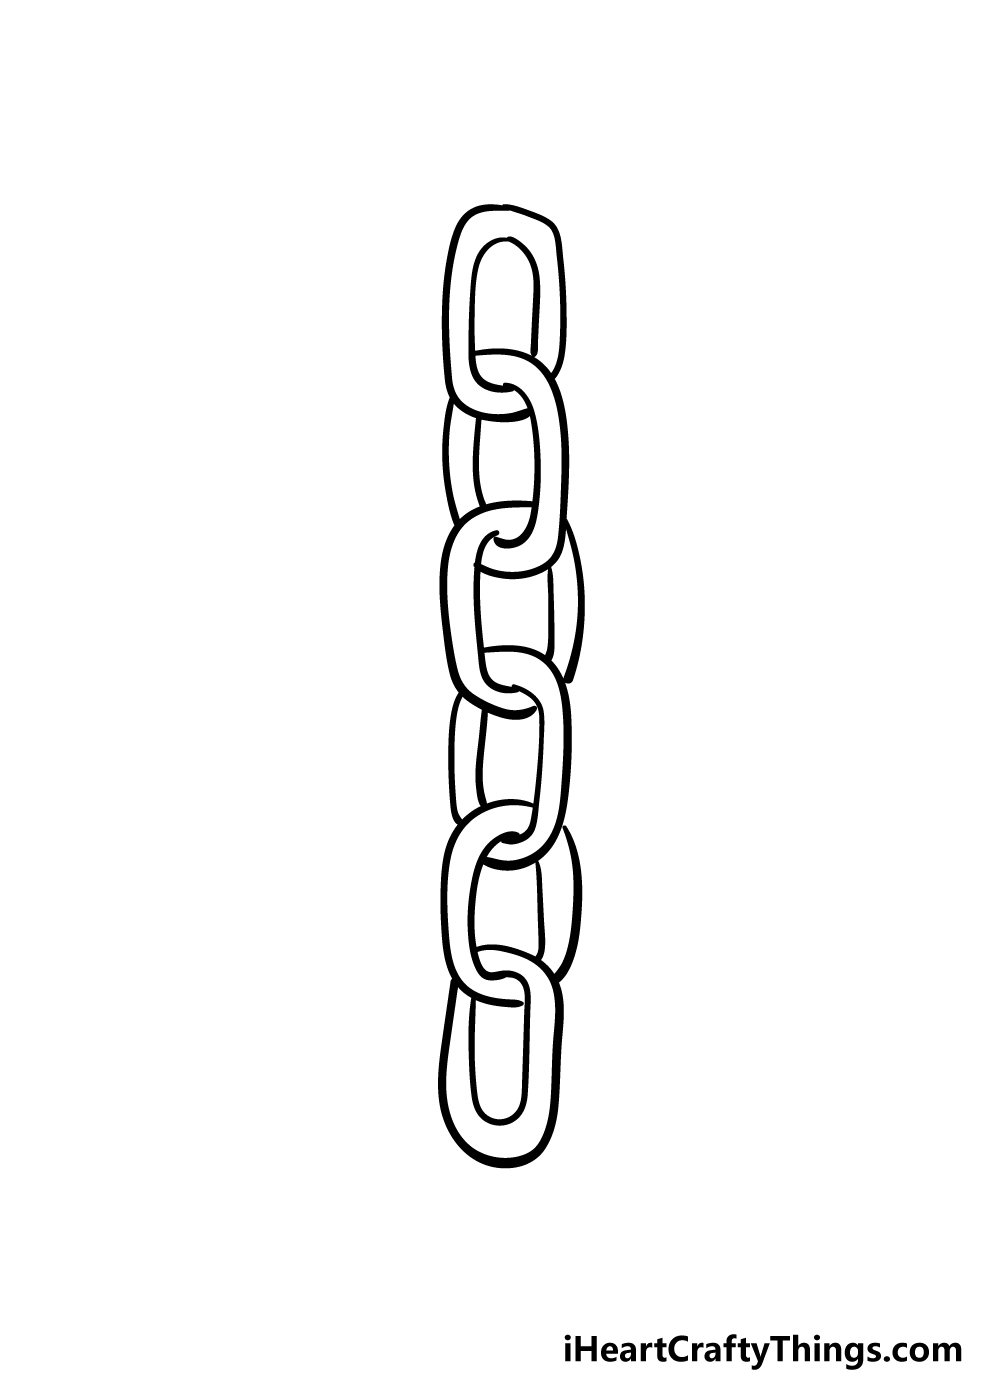 draw chain step 6